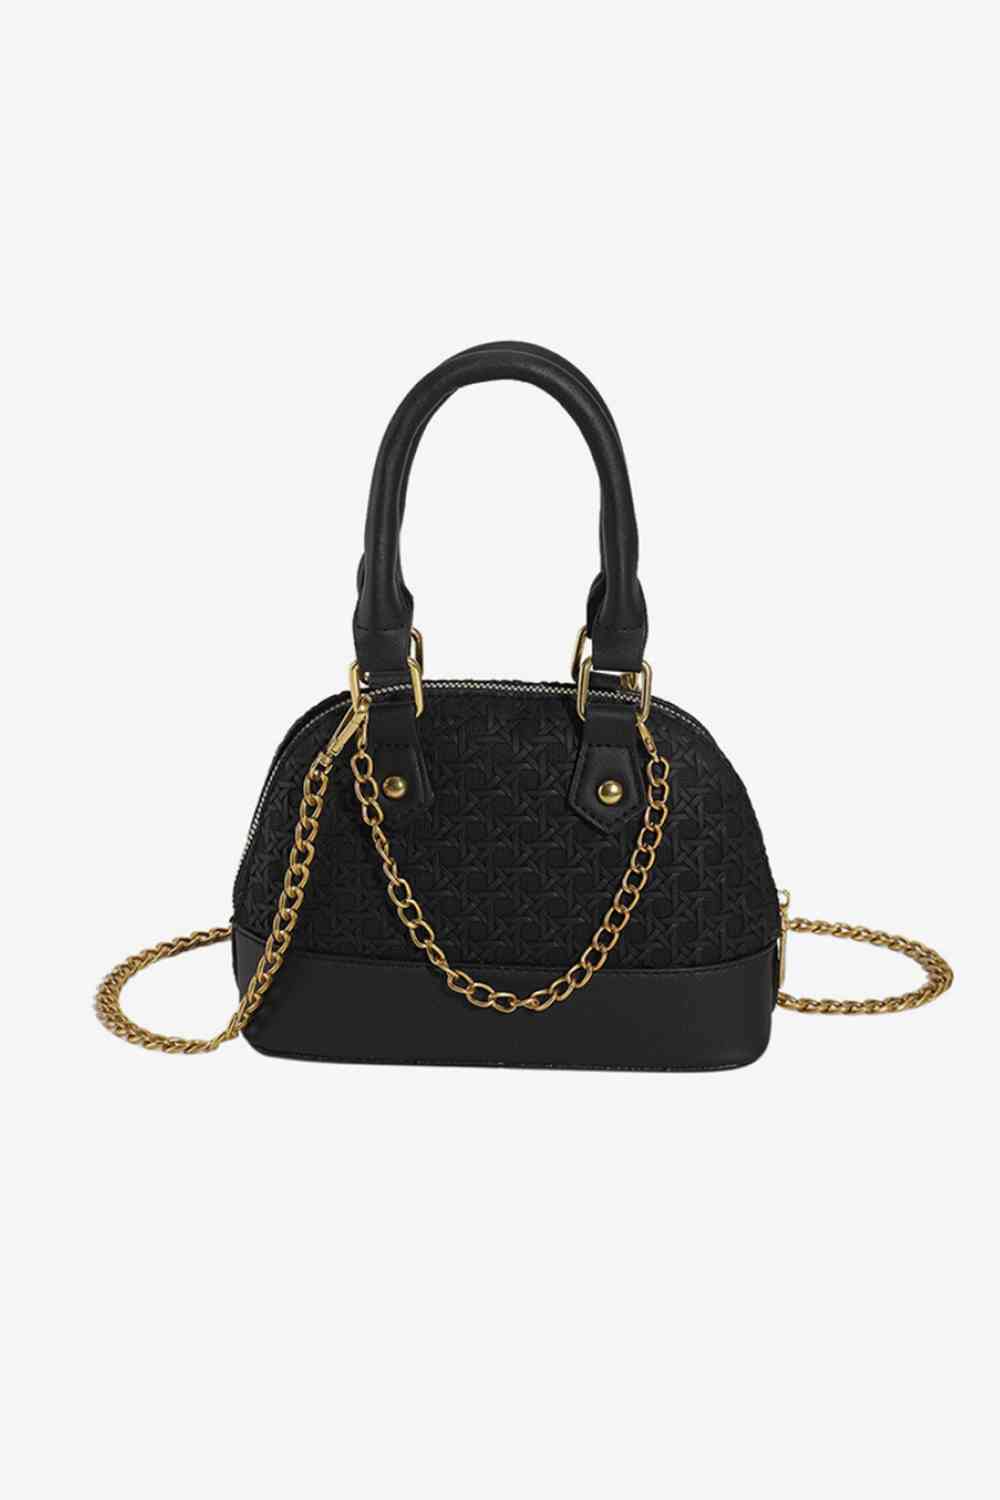 LouisWill Women Bag Ladies Fashion Handbags Shoulder Bags Soft PU